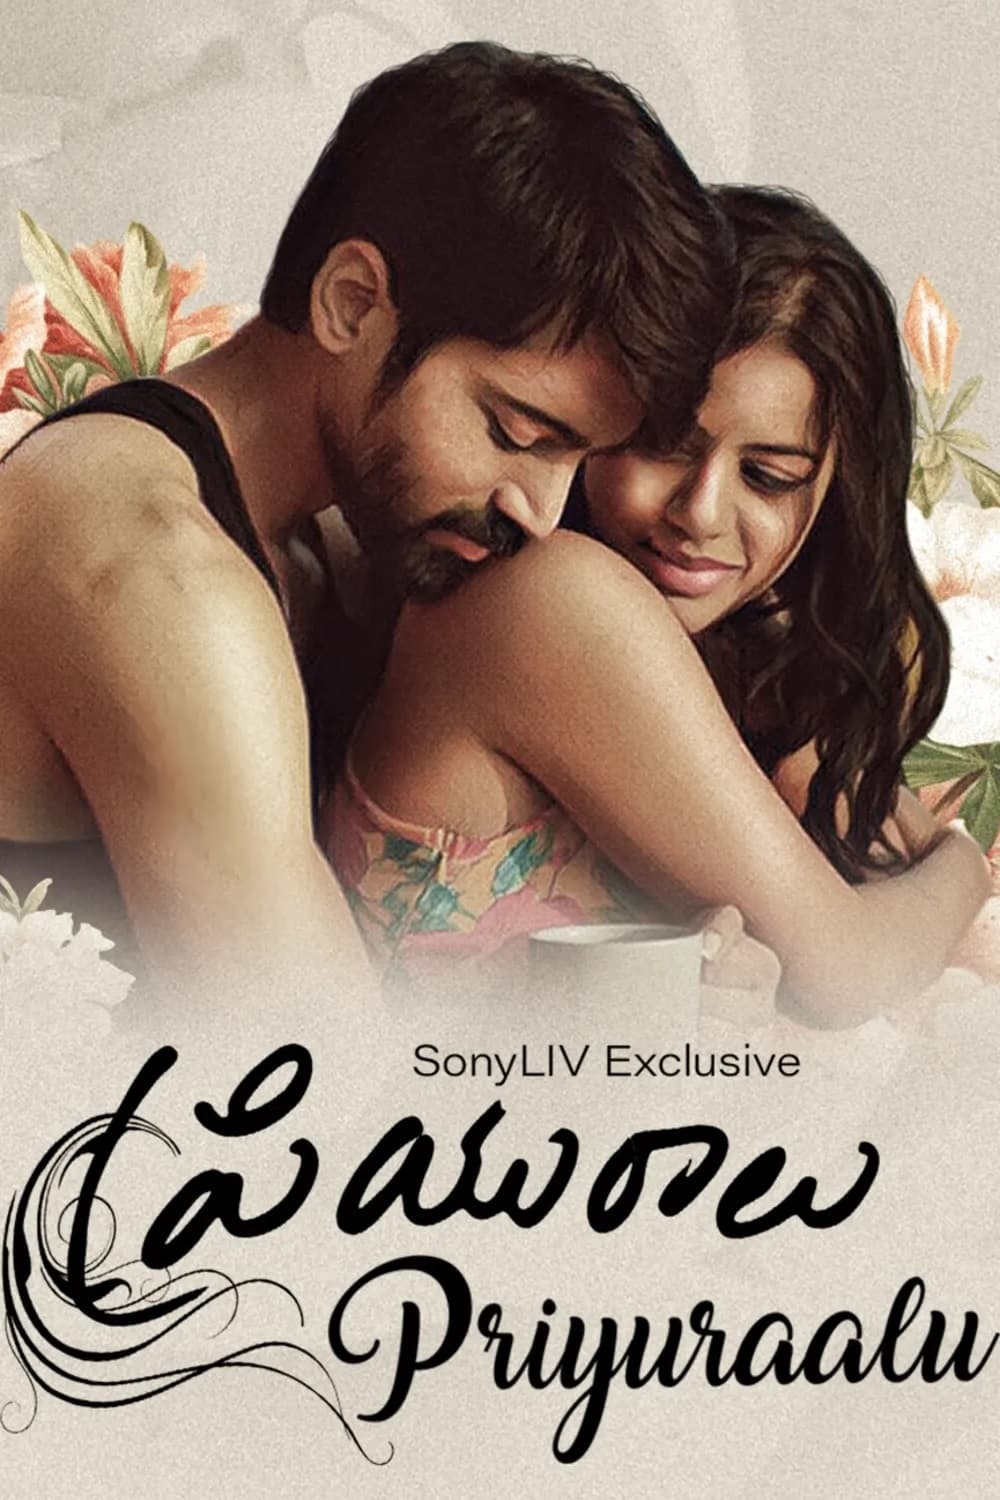 Poster for the movie "Priyuraalu"